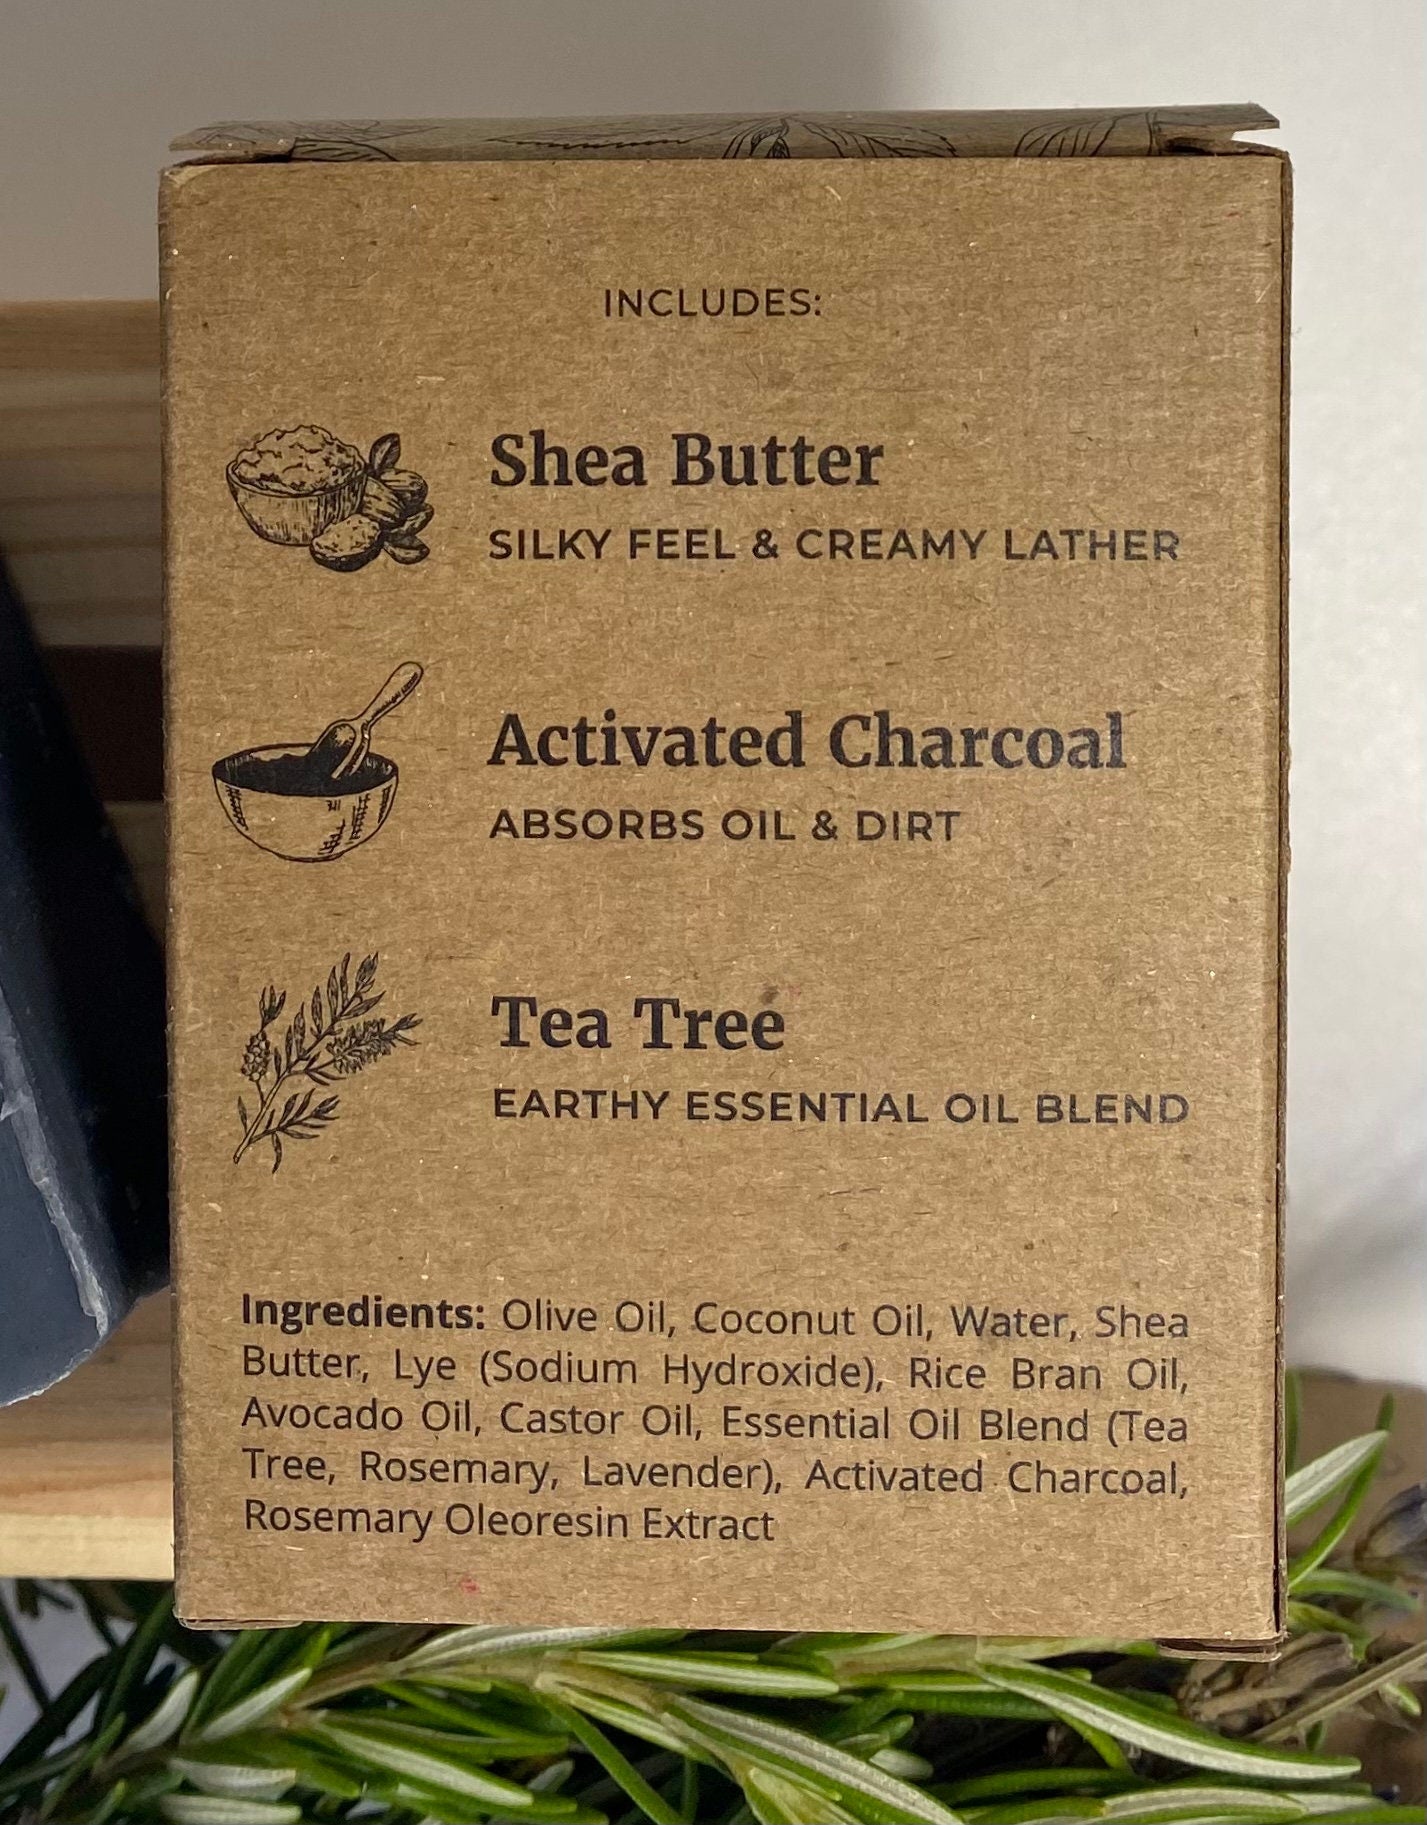 Charcoal Tea Tree Soap Bar